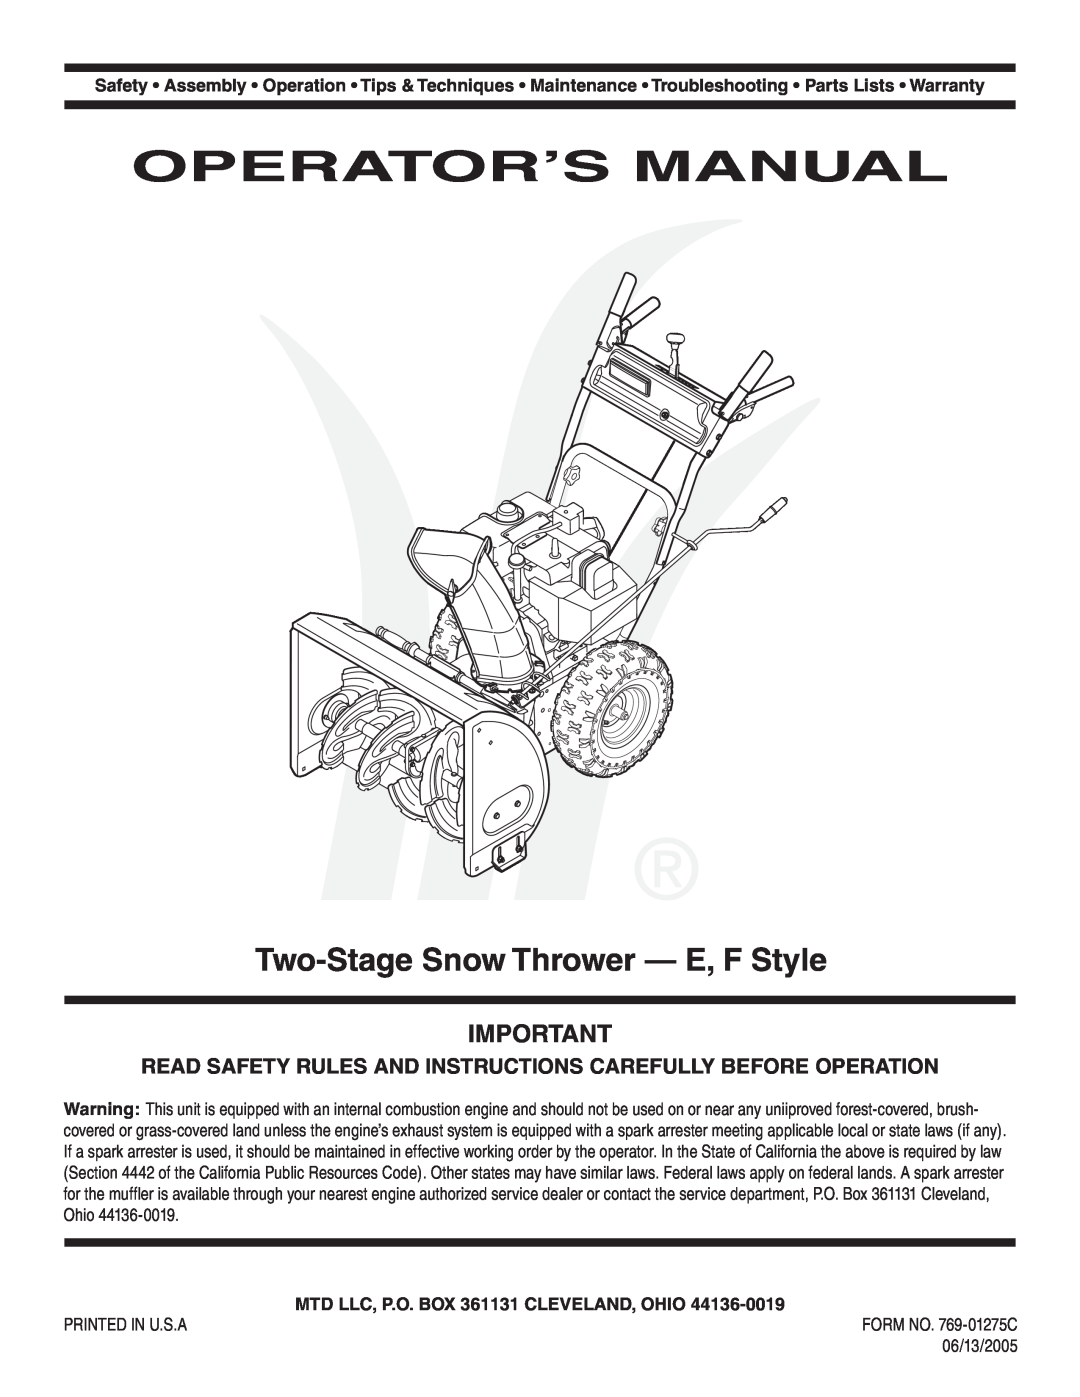 MTD 769-01275C warranty Operator’S Manual, Two-Stage Snow Thrower - E, F Style, MTD LLC, P.O. BOX 361131 CLEVELAND, OHIO 